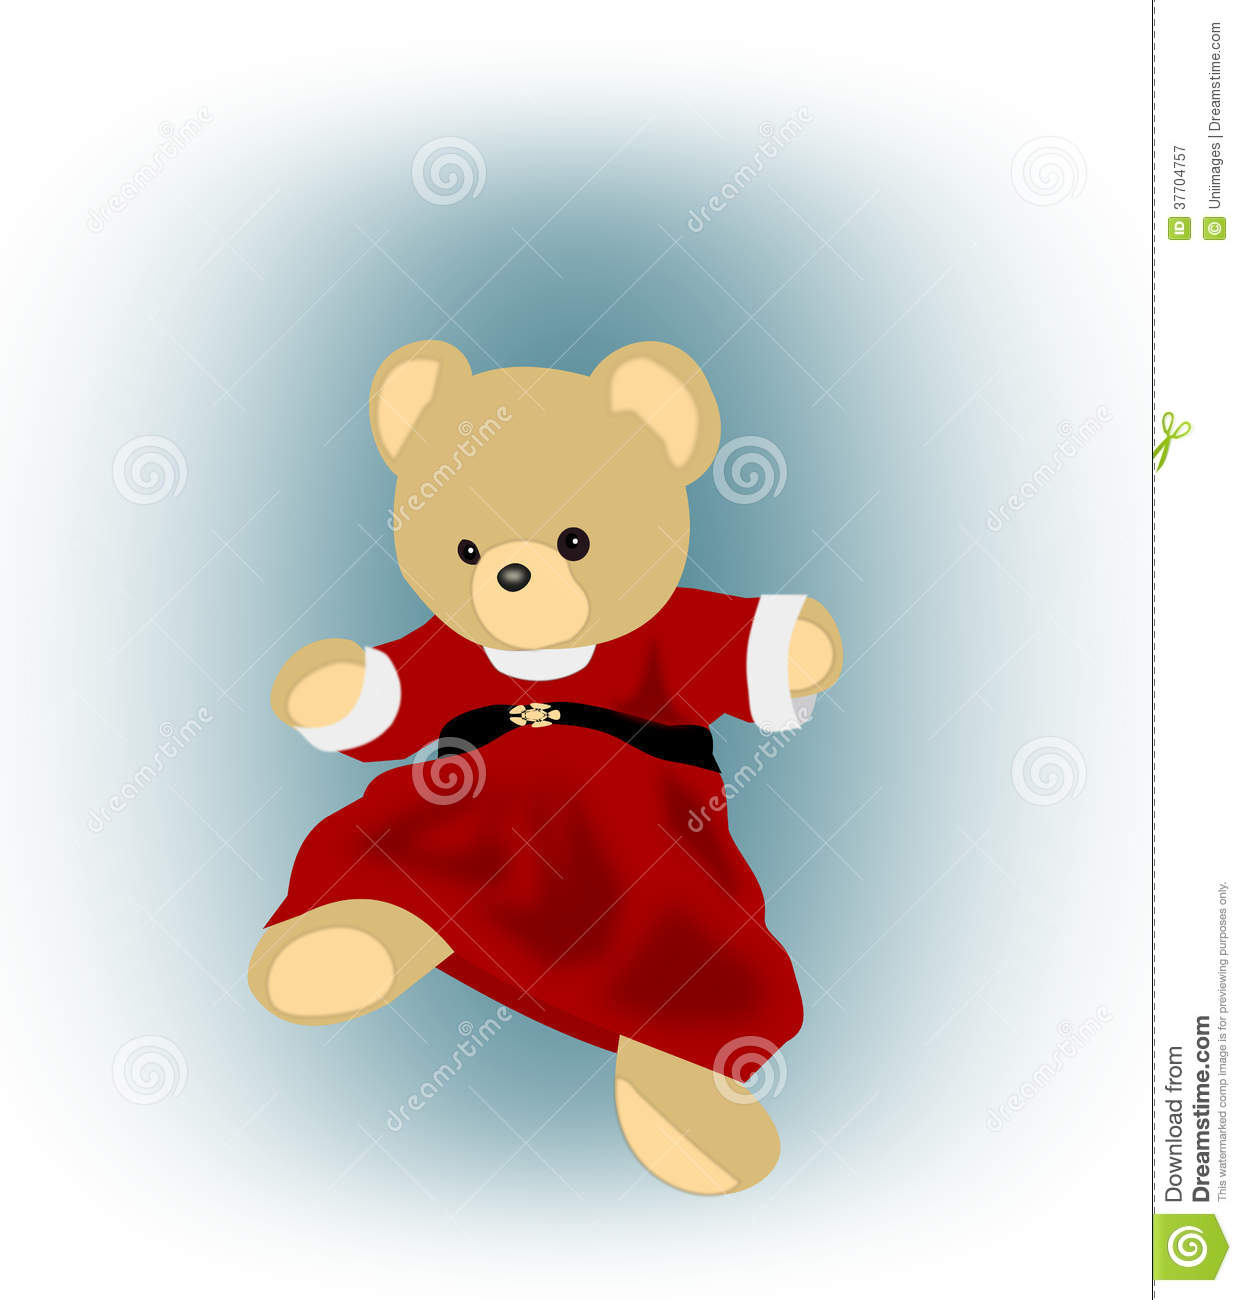 Dancing Teddy Bear Royalty Free Stock Photography   Image  37704757